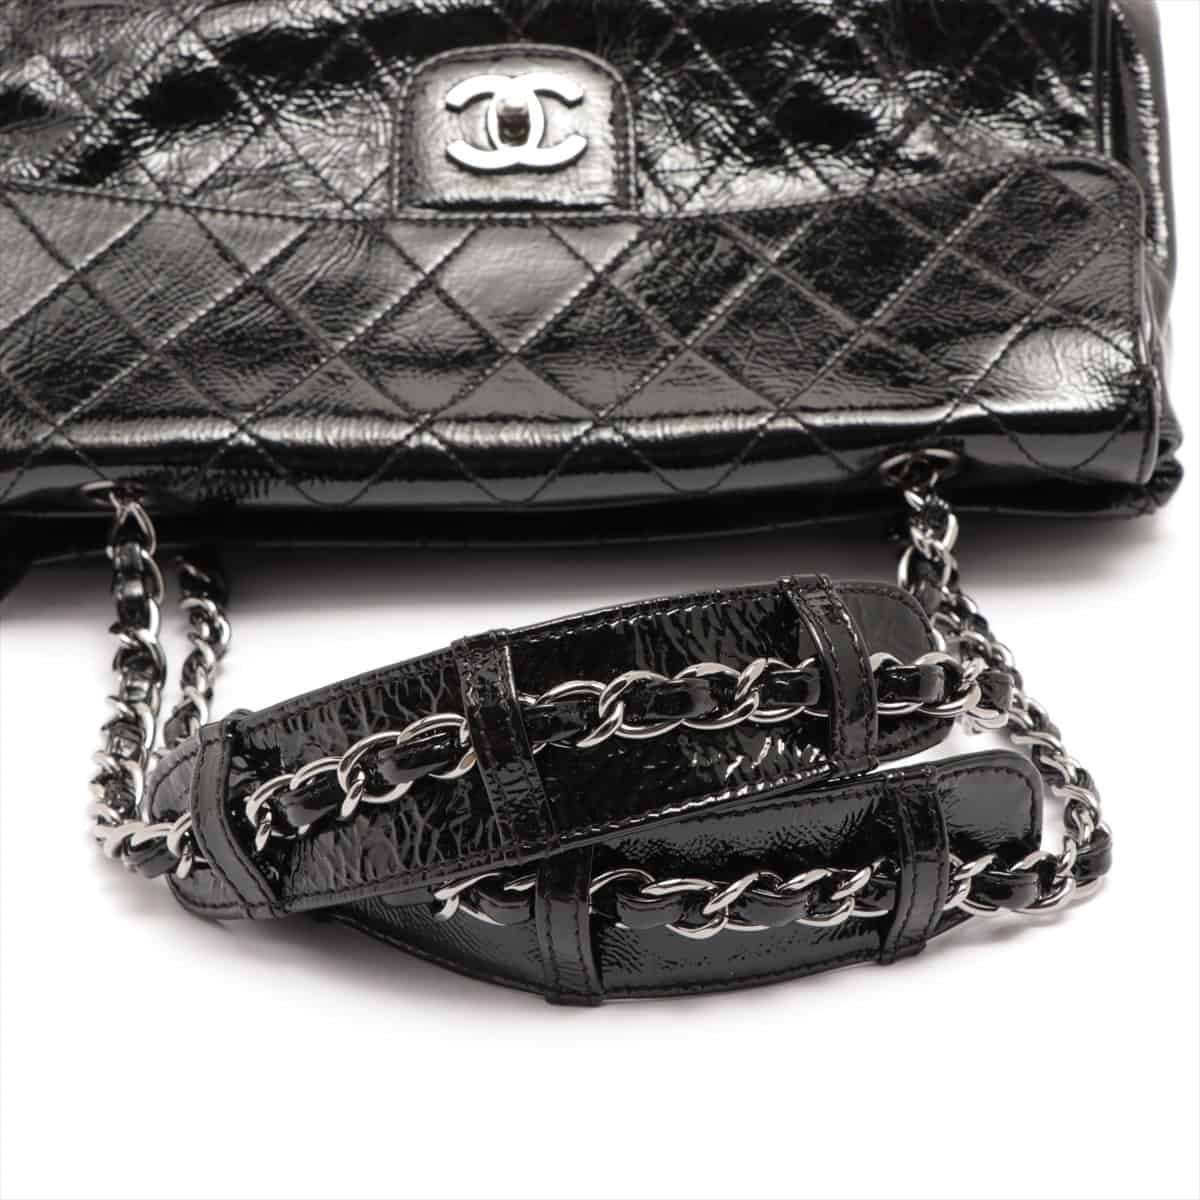 Chanel Matelasse Patent leather Chain handbag Black Silver Metal fittings 10XXXXXX